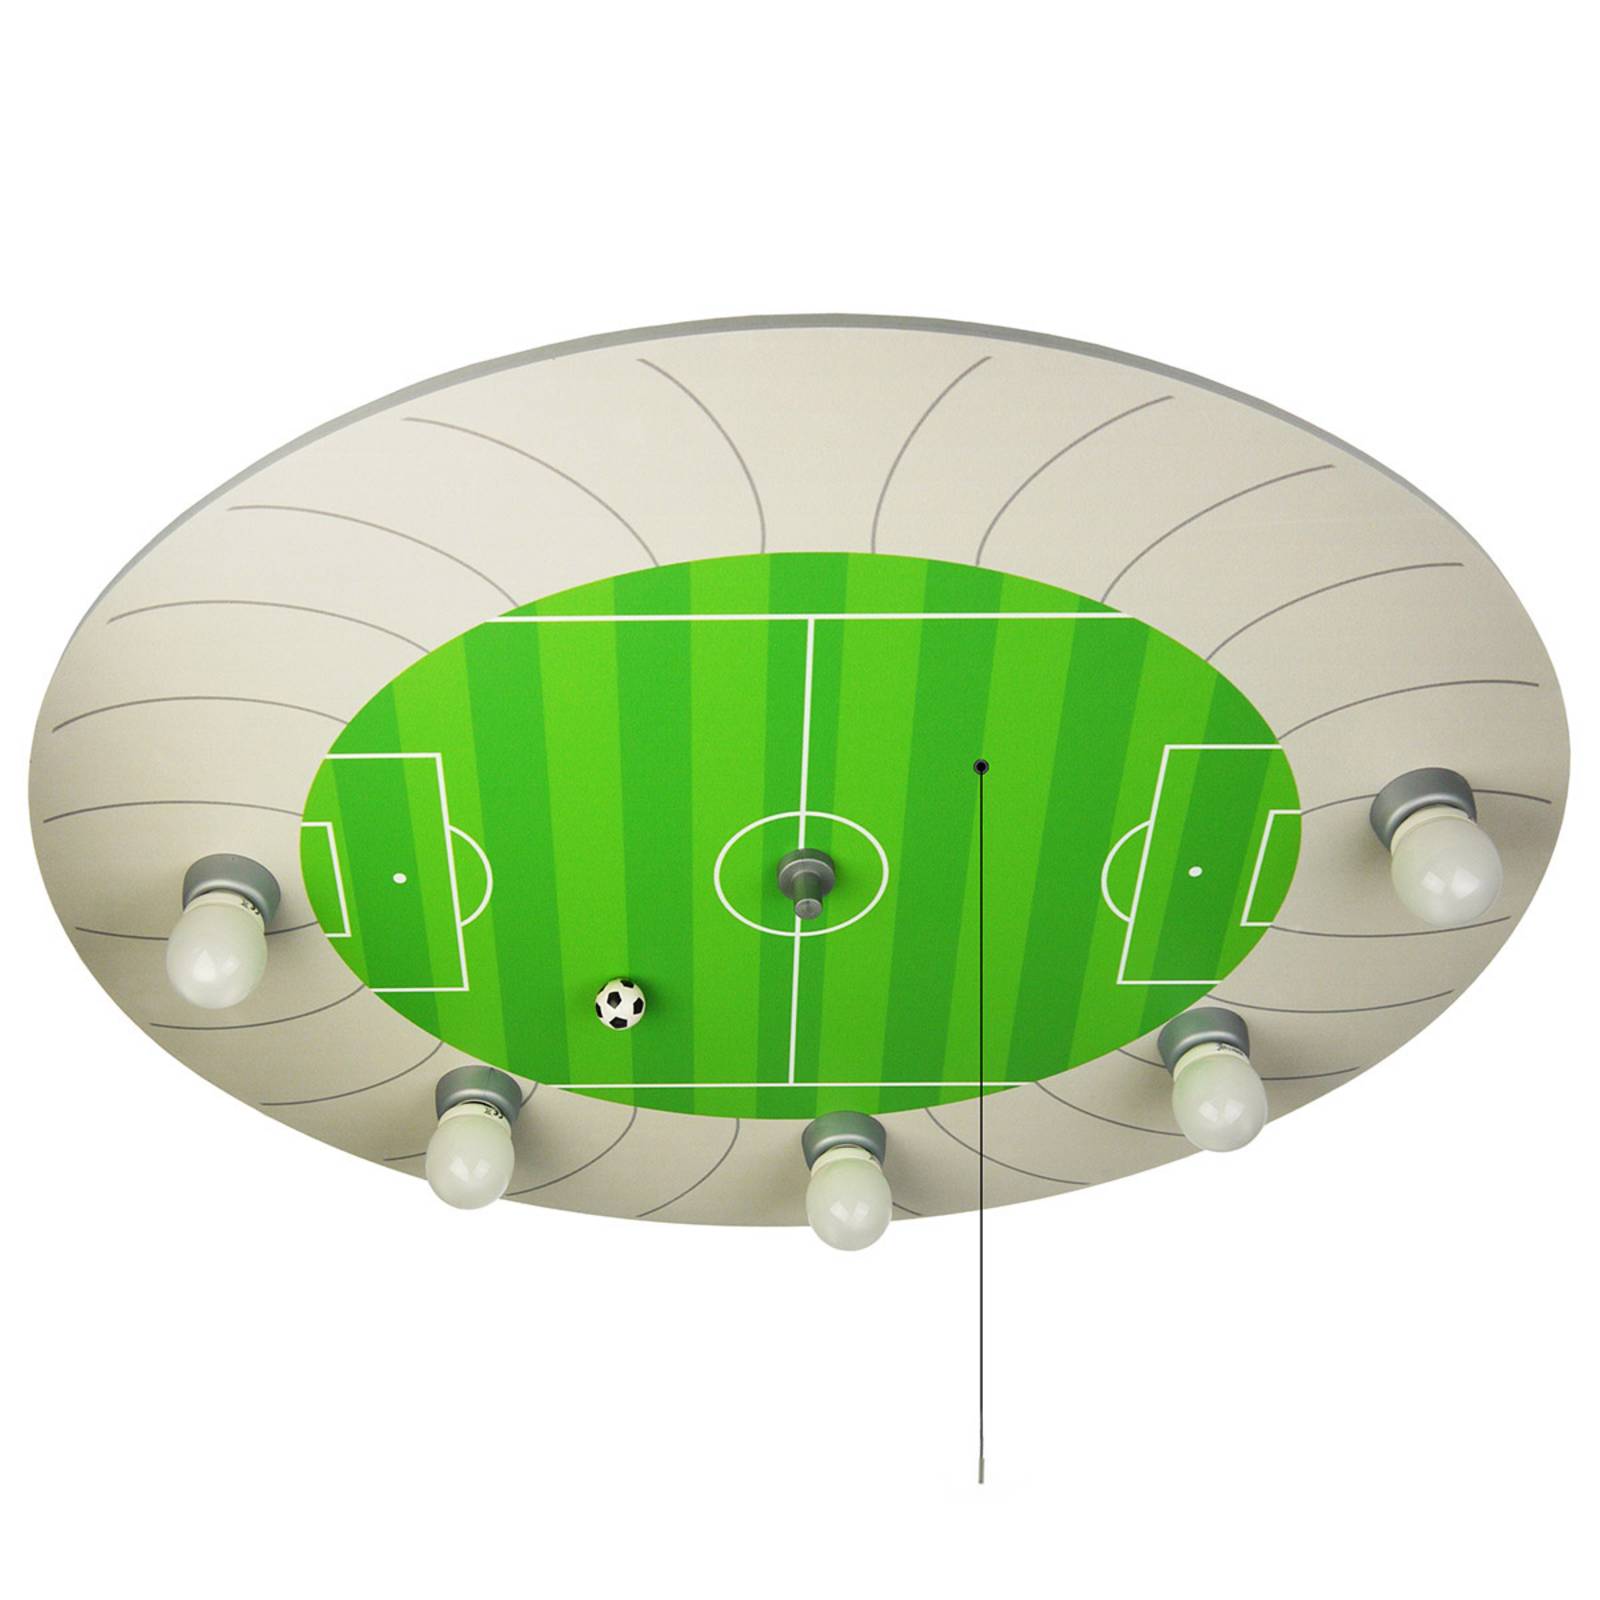 Voetbalstadion plafondlamp met Alexa-module